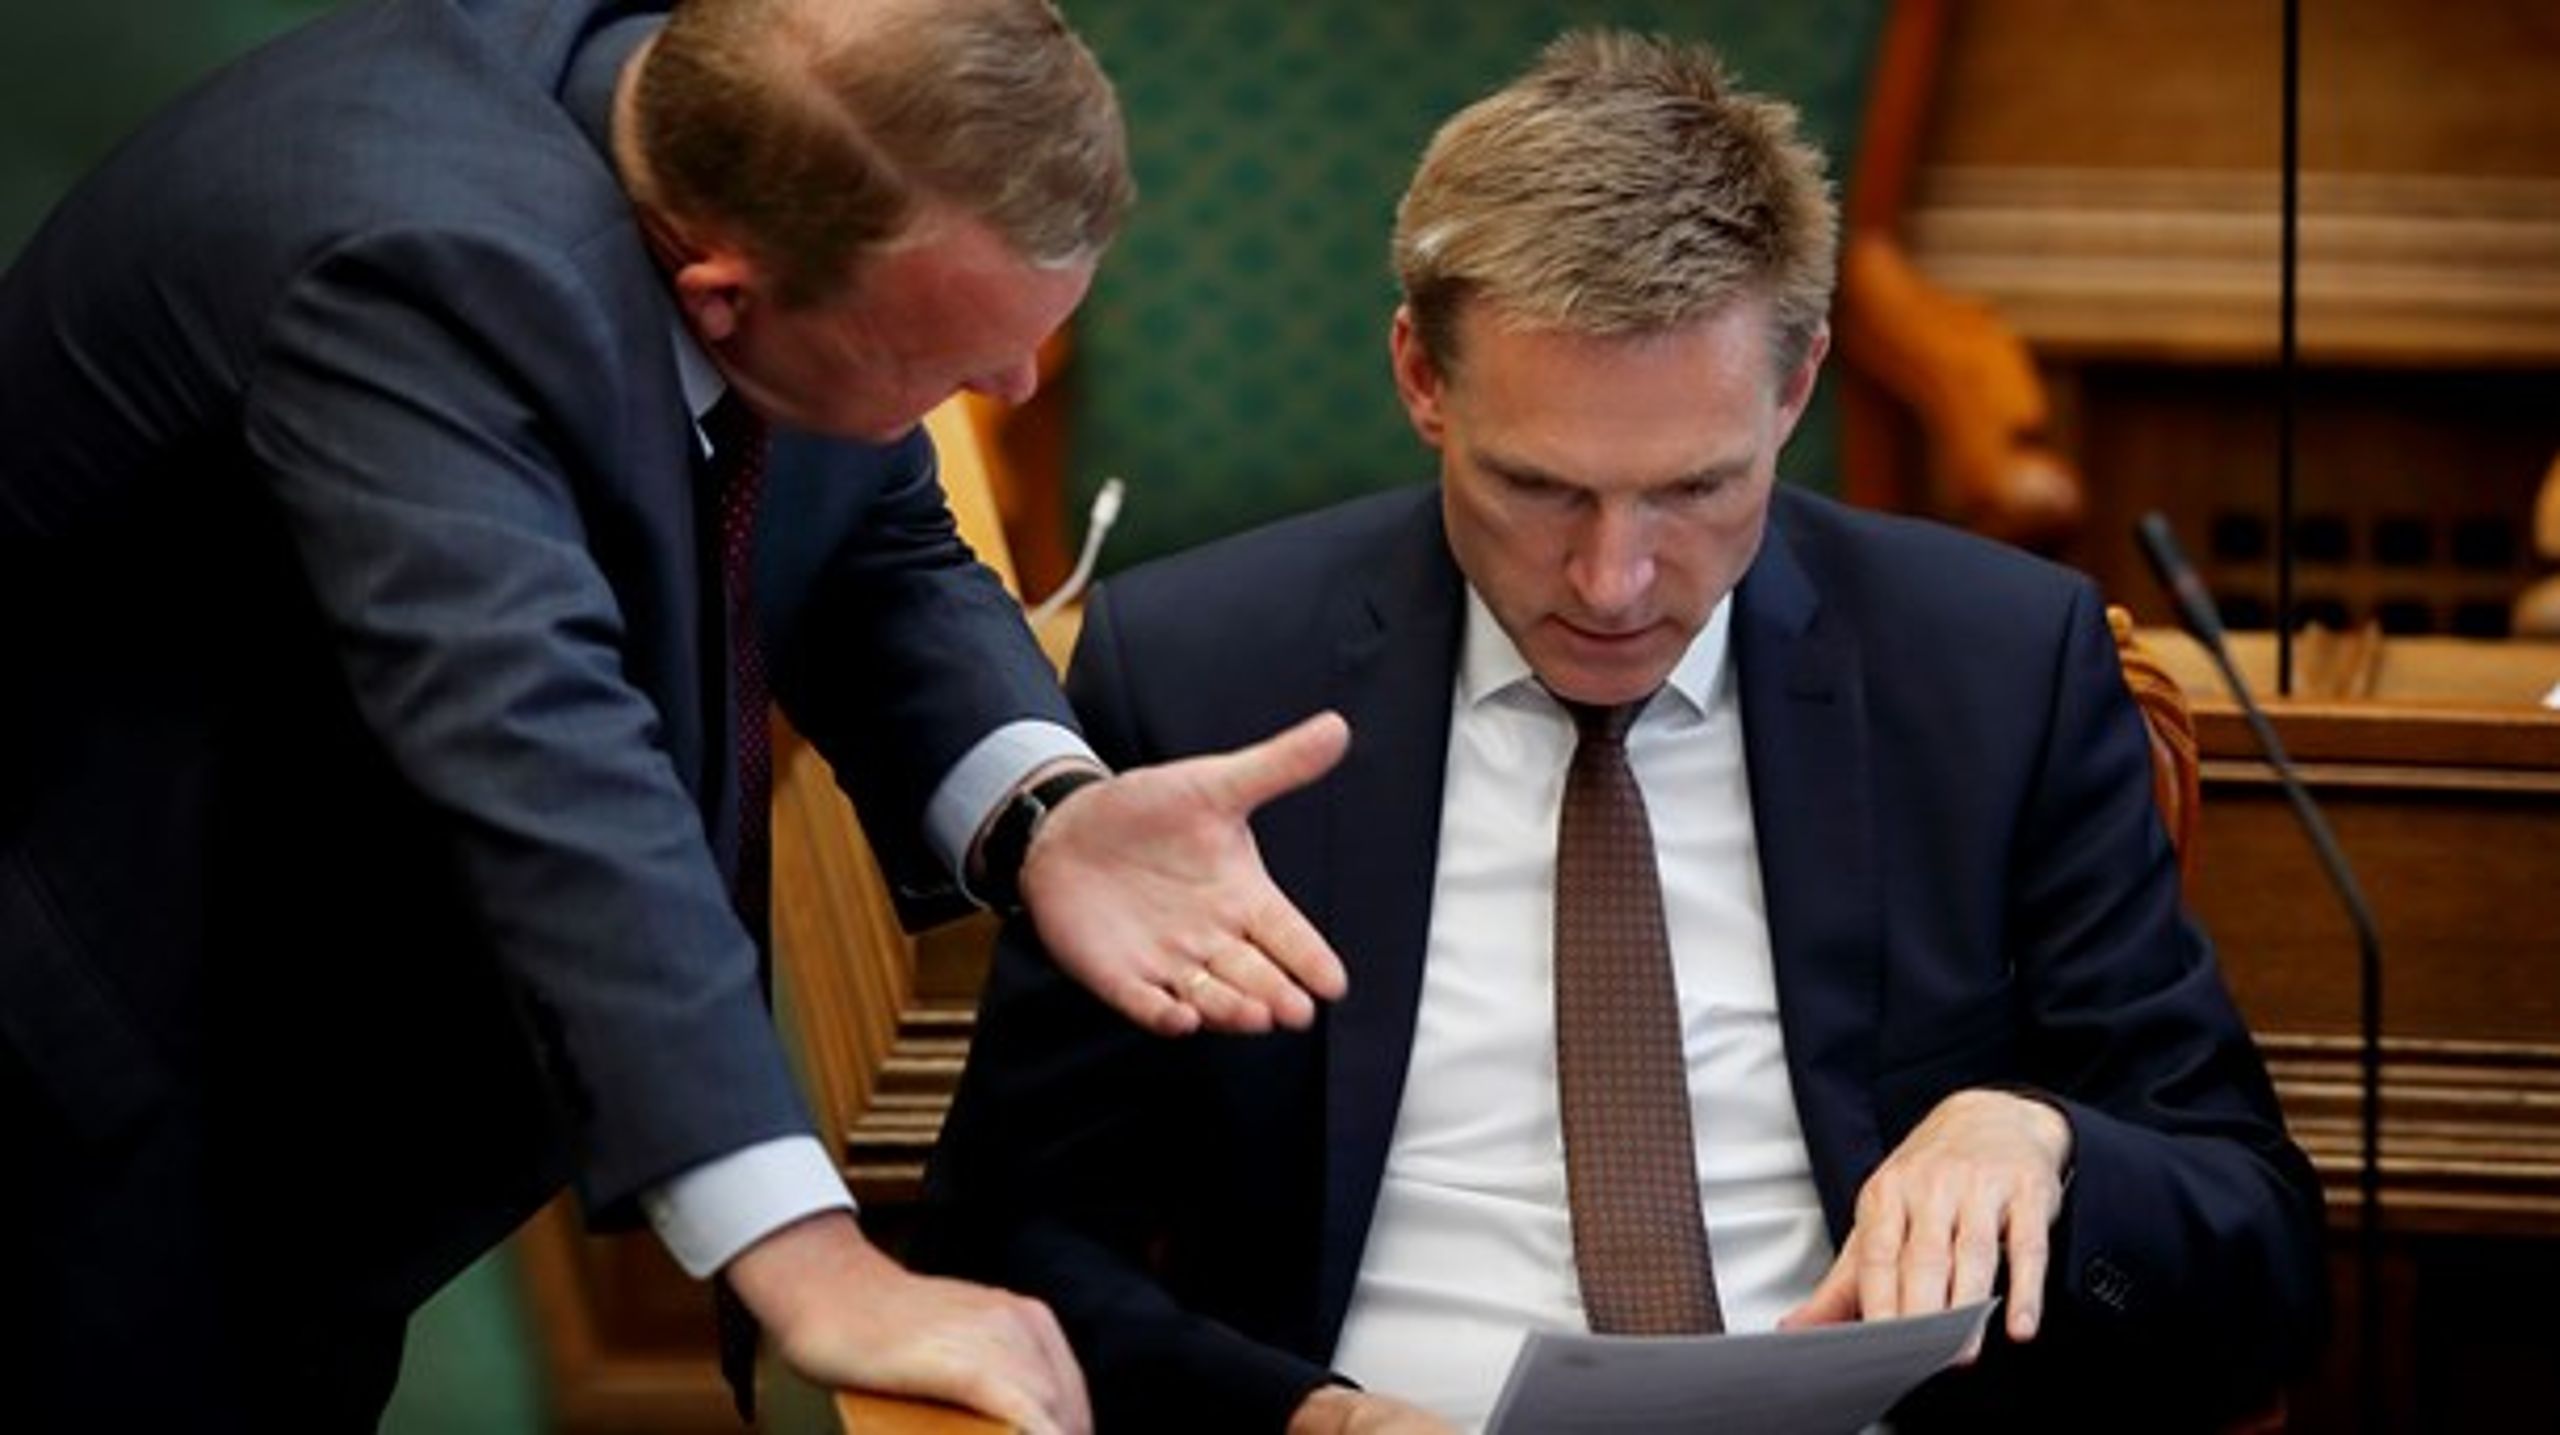 Muligheden for forhandlingssammenbrud er Kristian Thulesen Dahls største klemme på Løkke-regeringen, skriver Jarl Cordua.